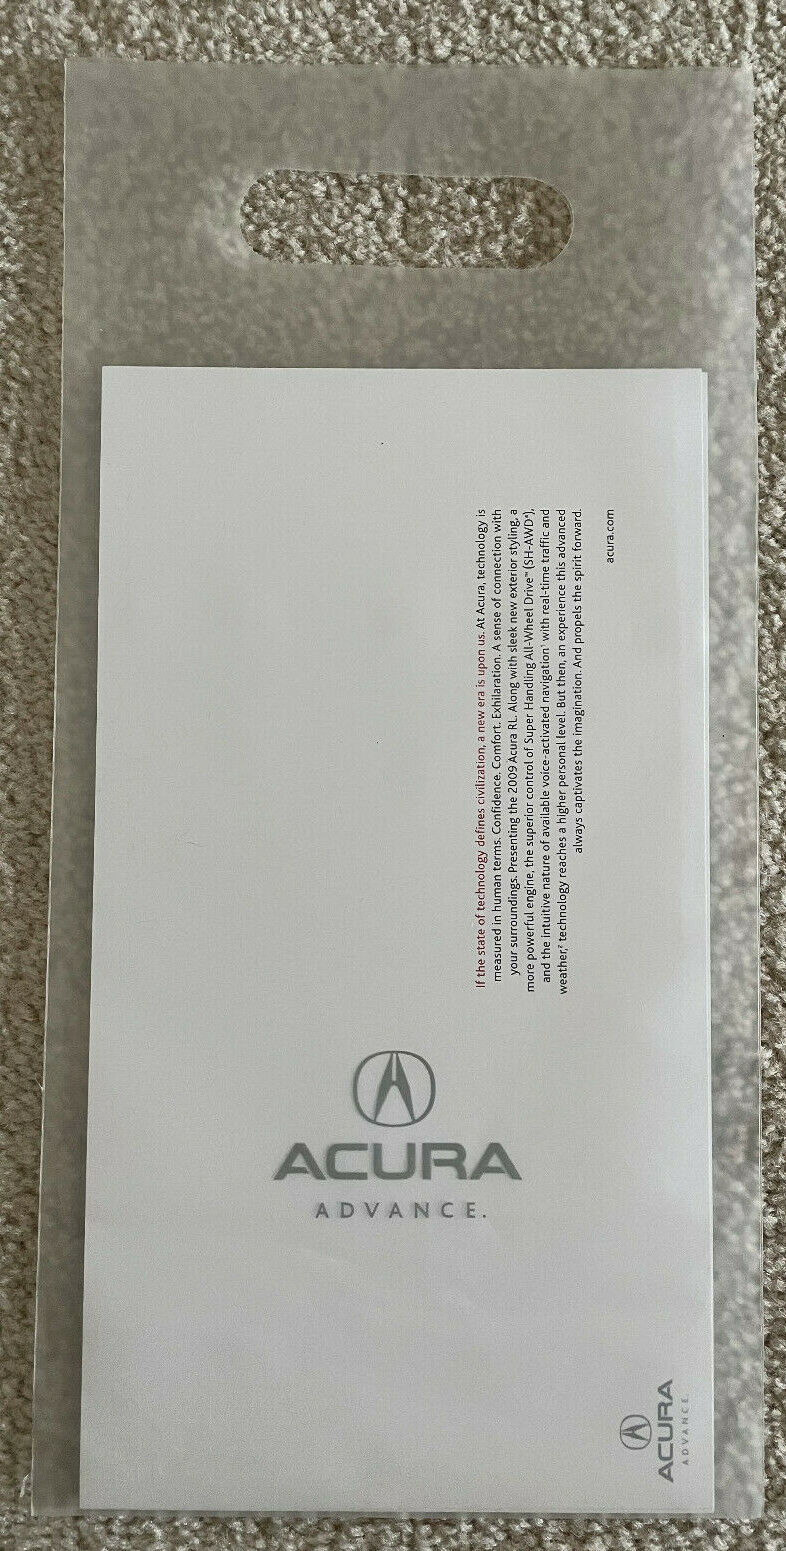 Acura Rl 2009 Promo Print Set With Bag Advance 7 Pieces New 6.25" X 11.5" Rare